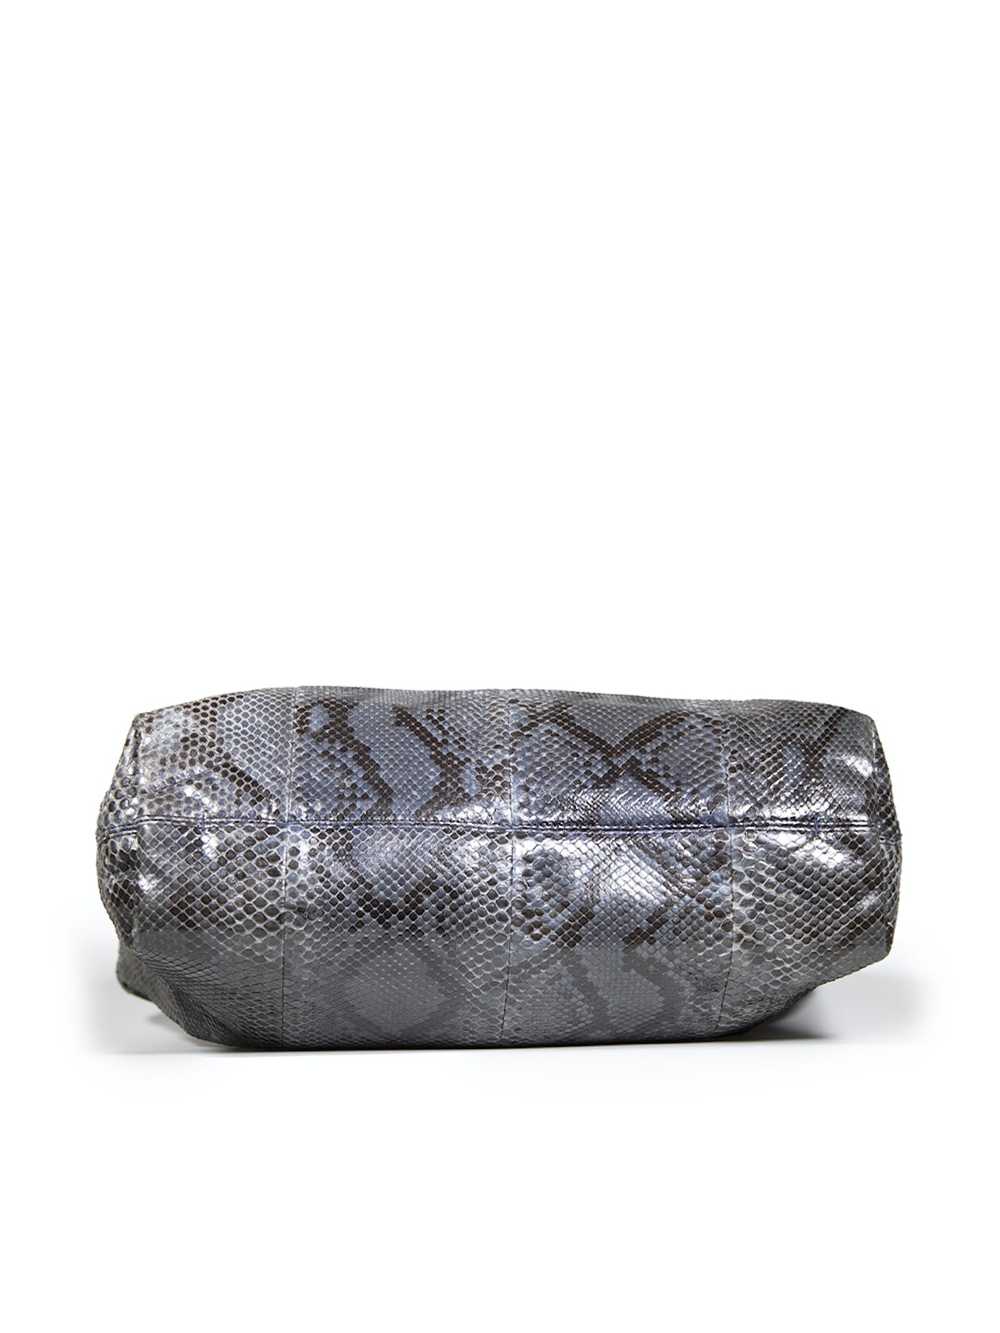 Lanvin Grey Snakeskin Happy Chain Handle Tote Bag - image 4